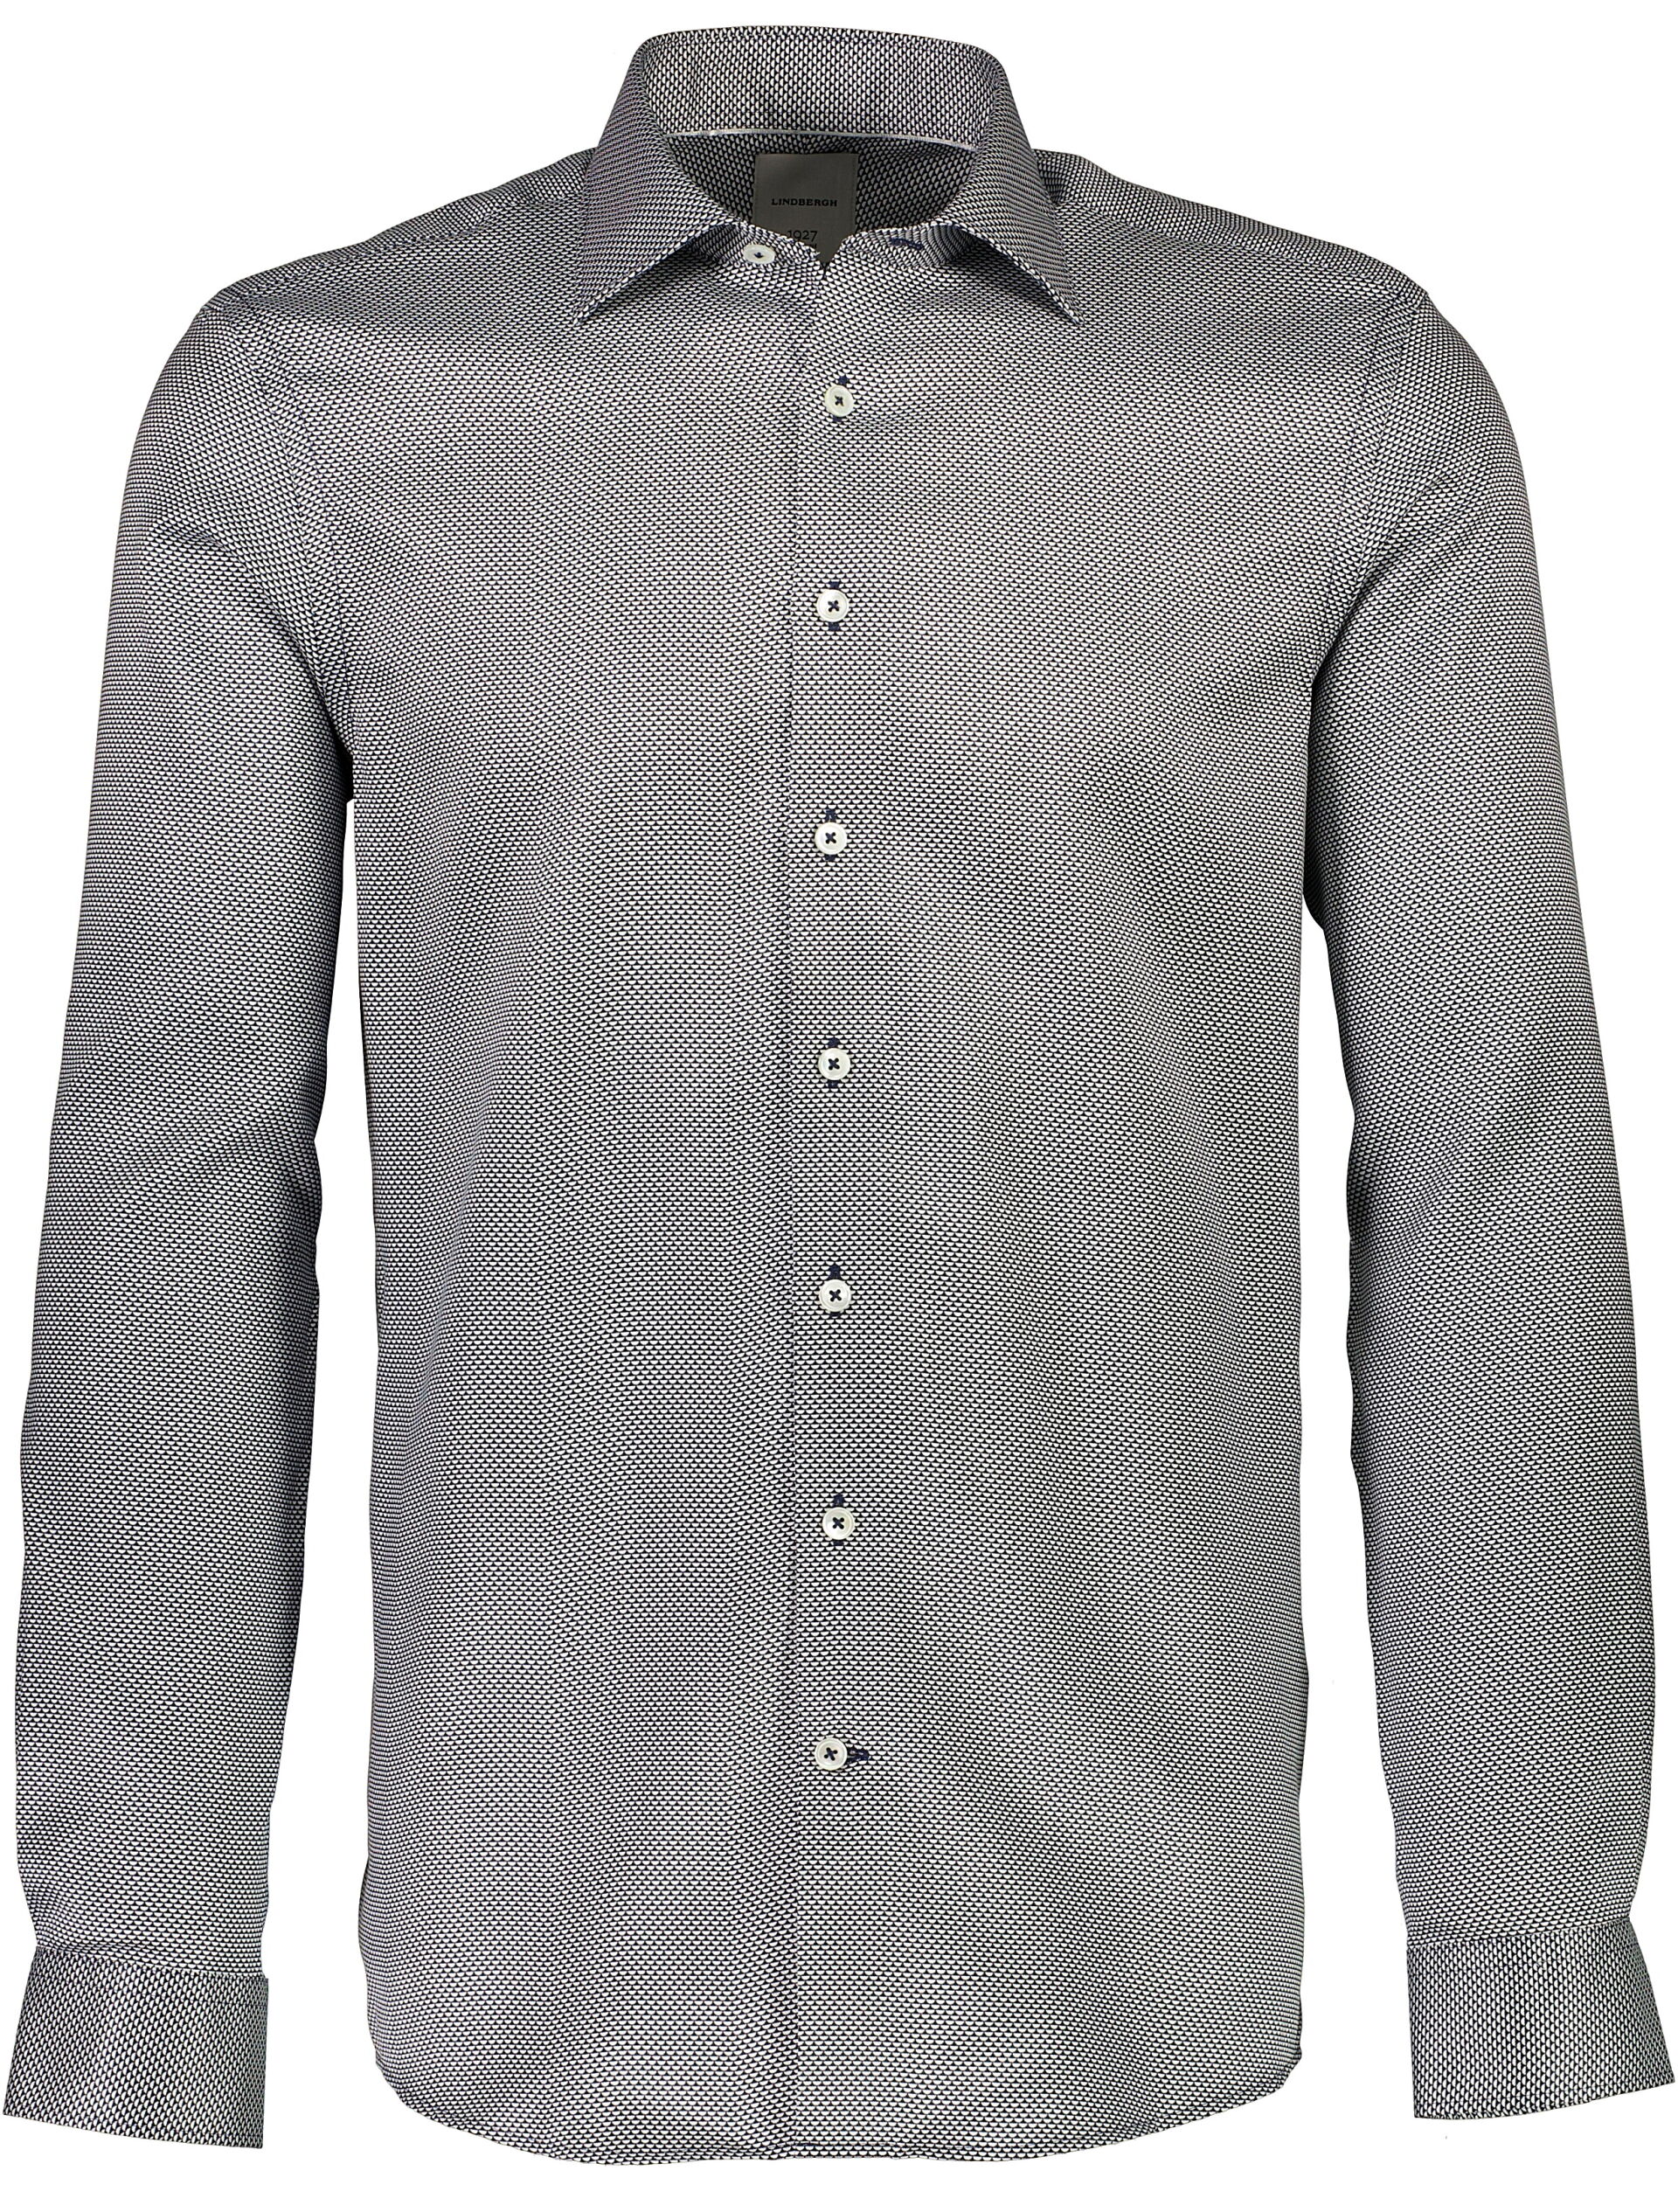 1927 Business casual shirt 30-247120